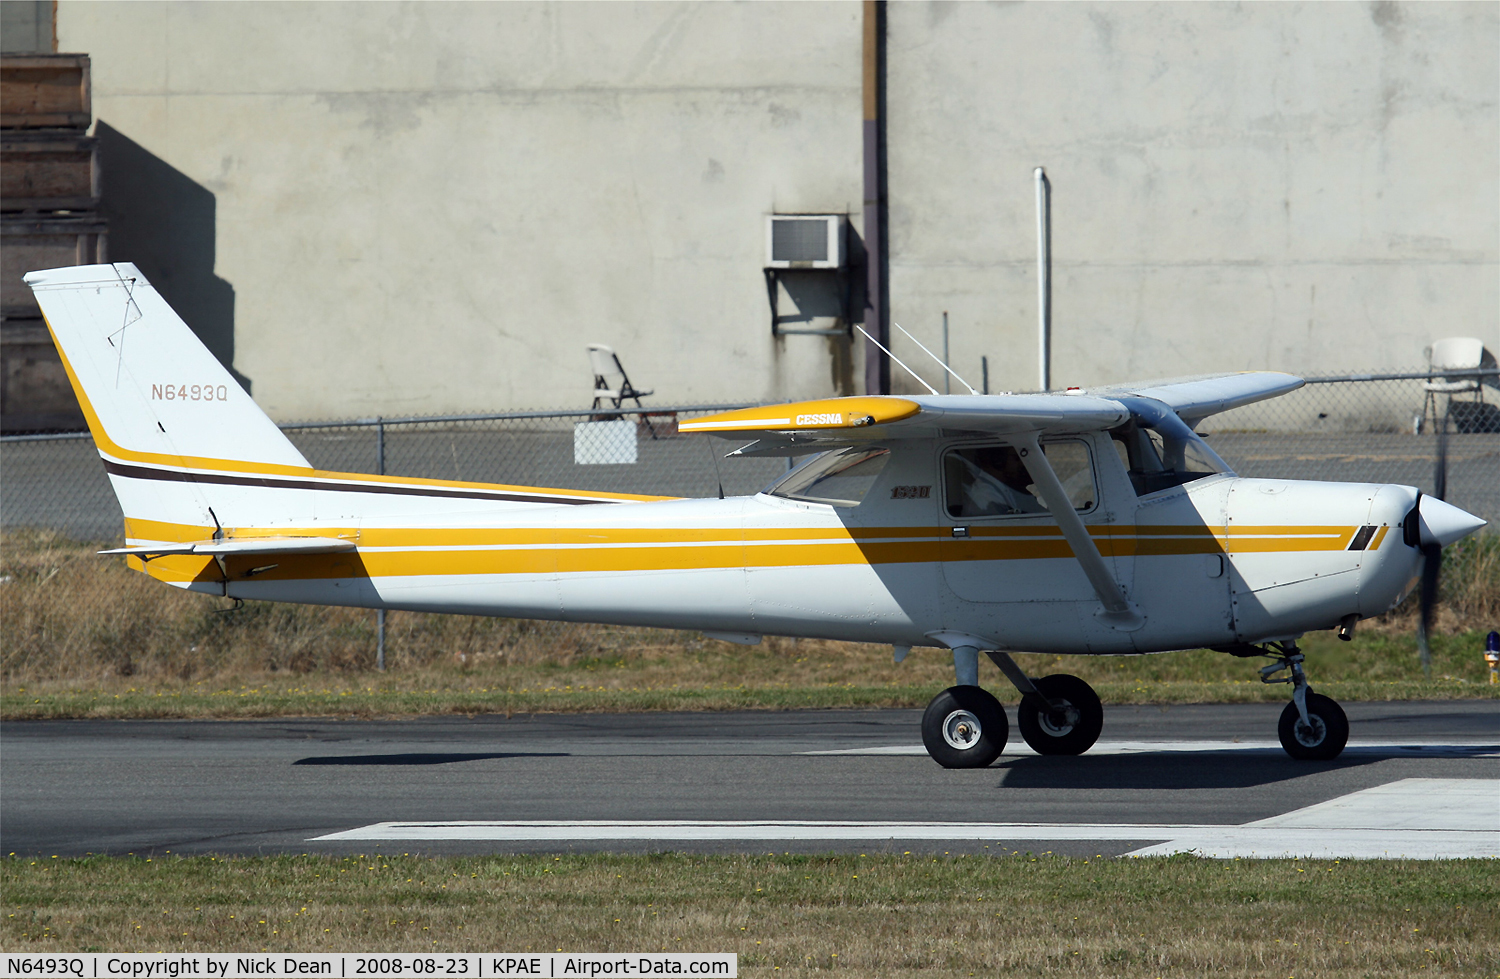 N6493Q, 1981 Cessna 152 C/N 15285262, KPAE 34R this airframe has now become N152LT